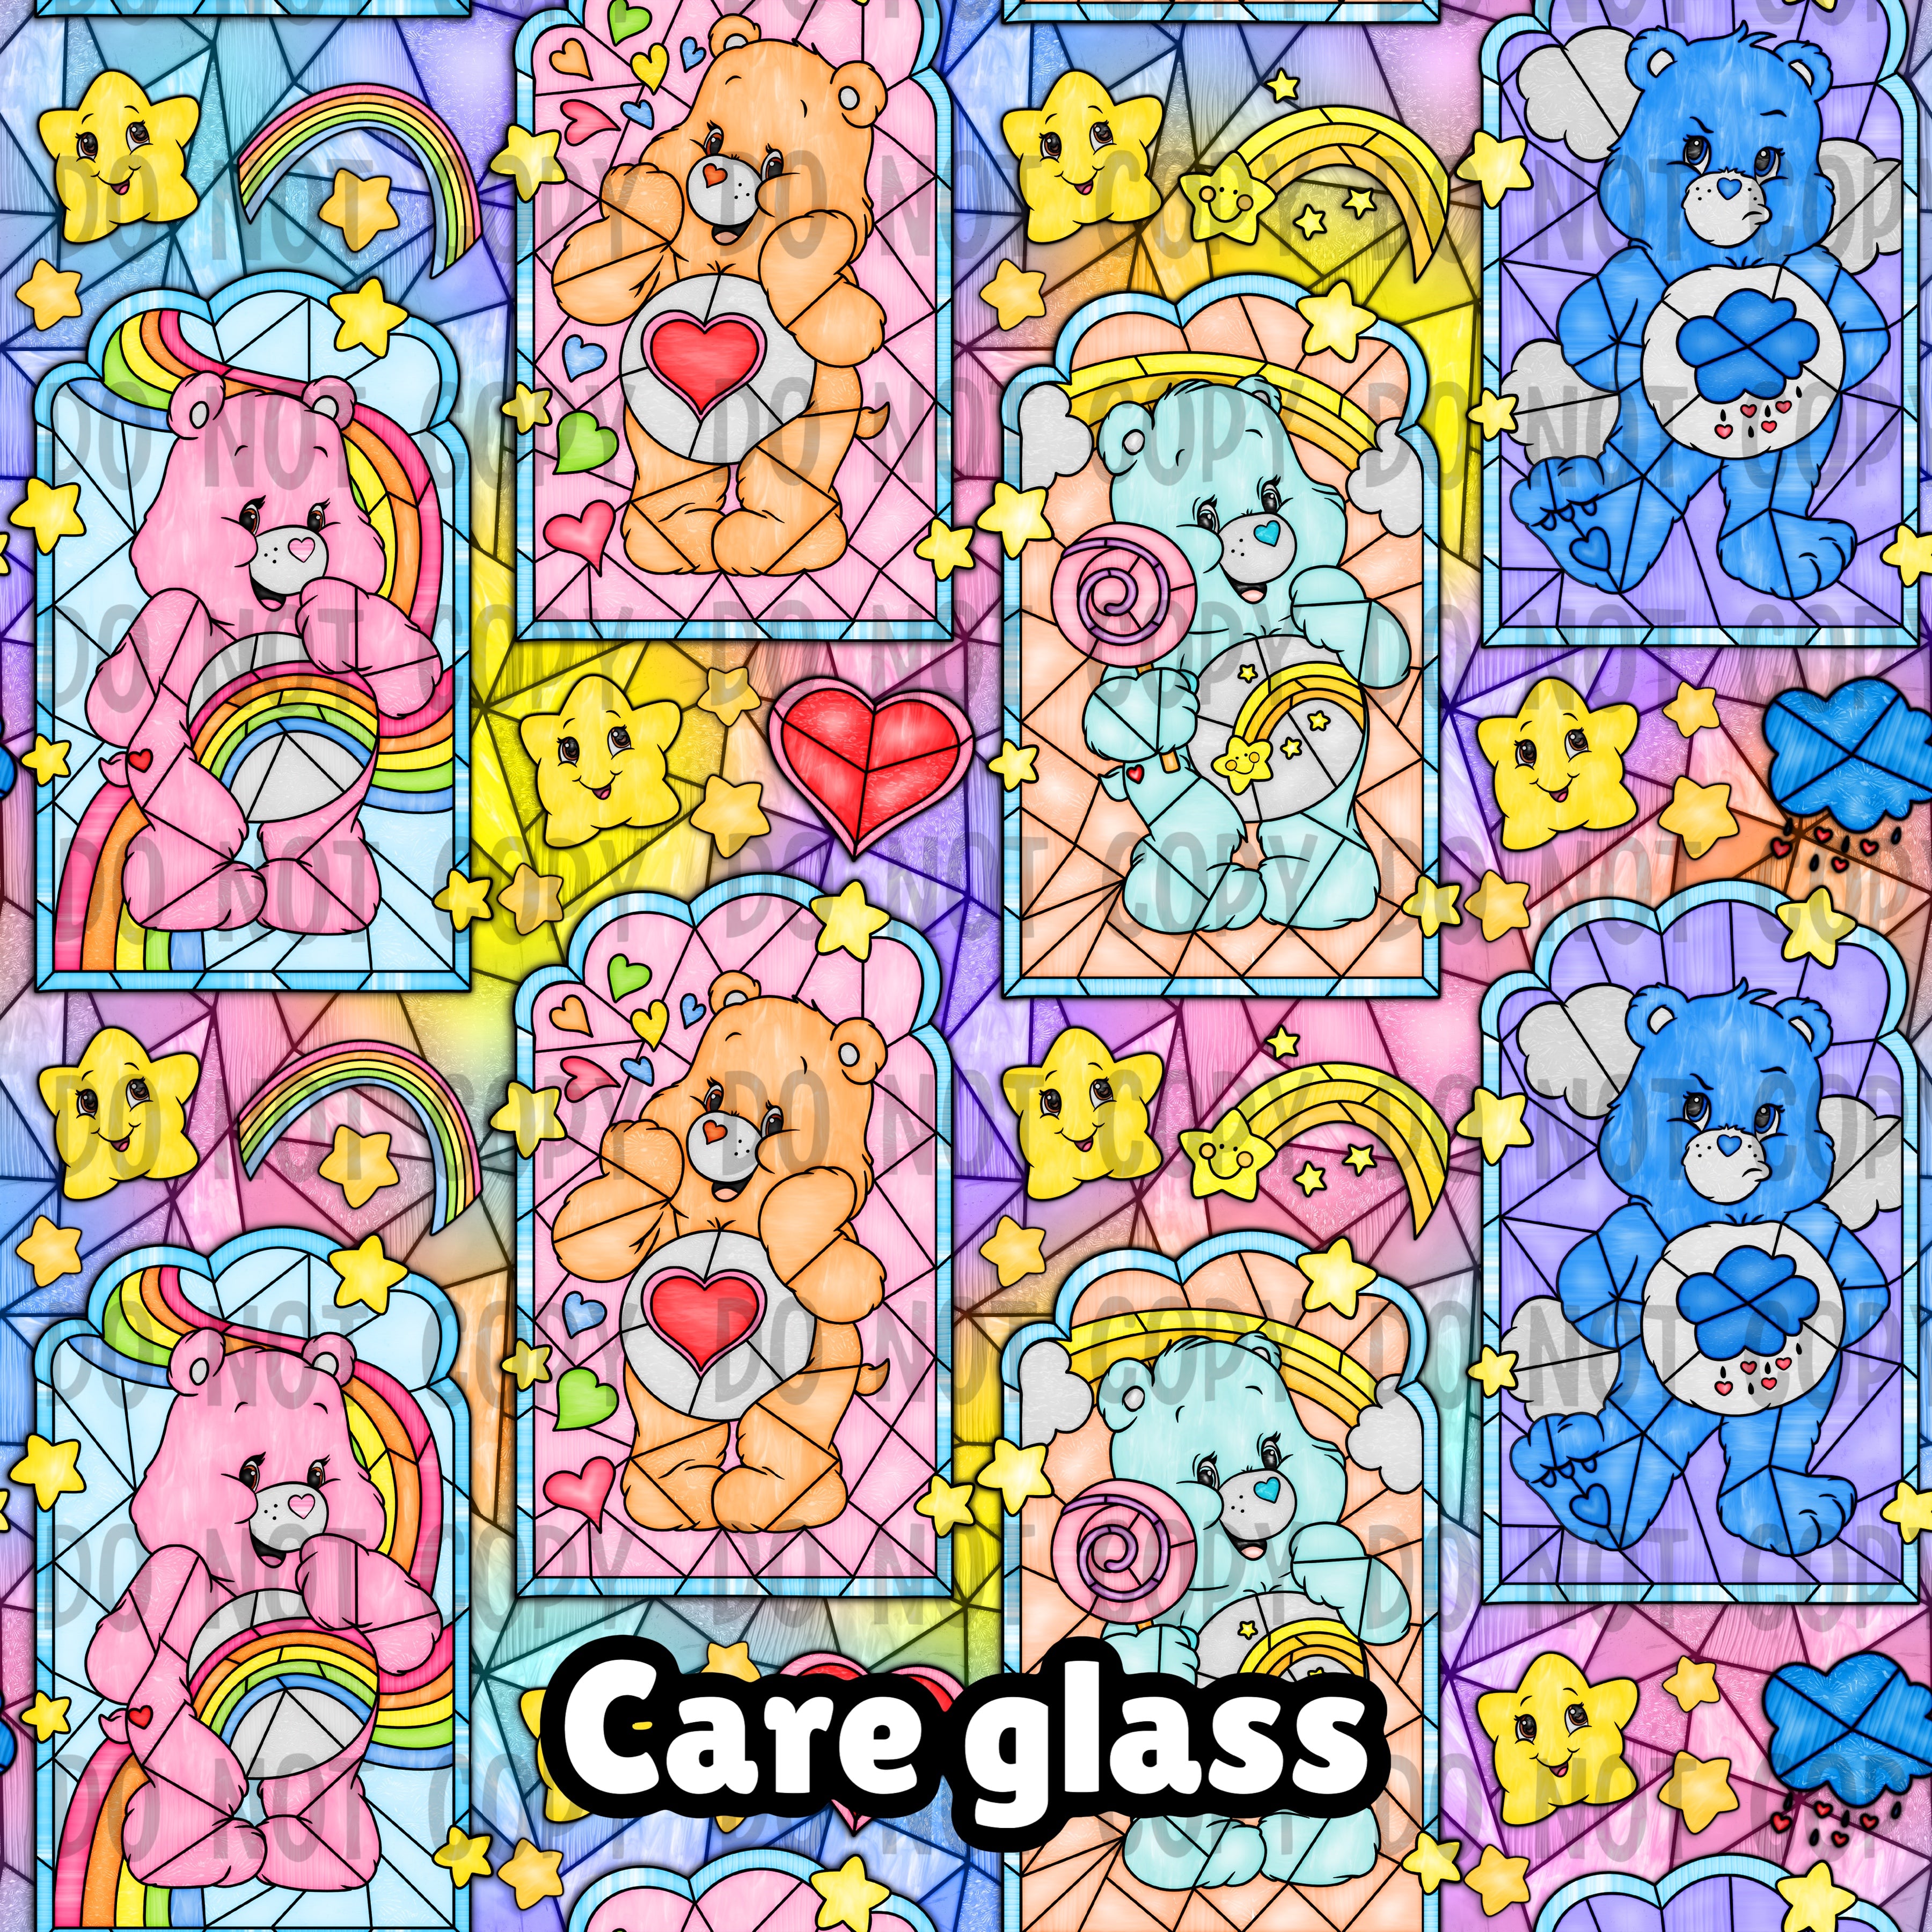 Care glass